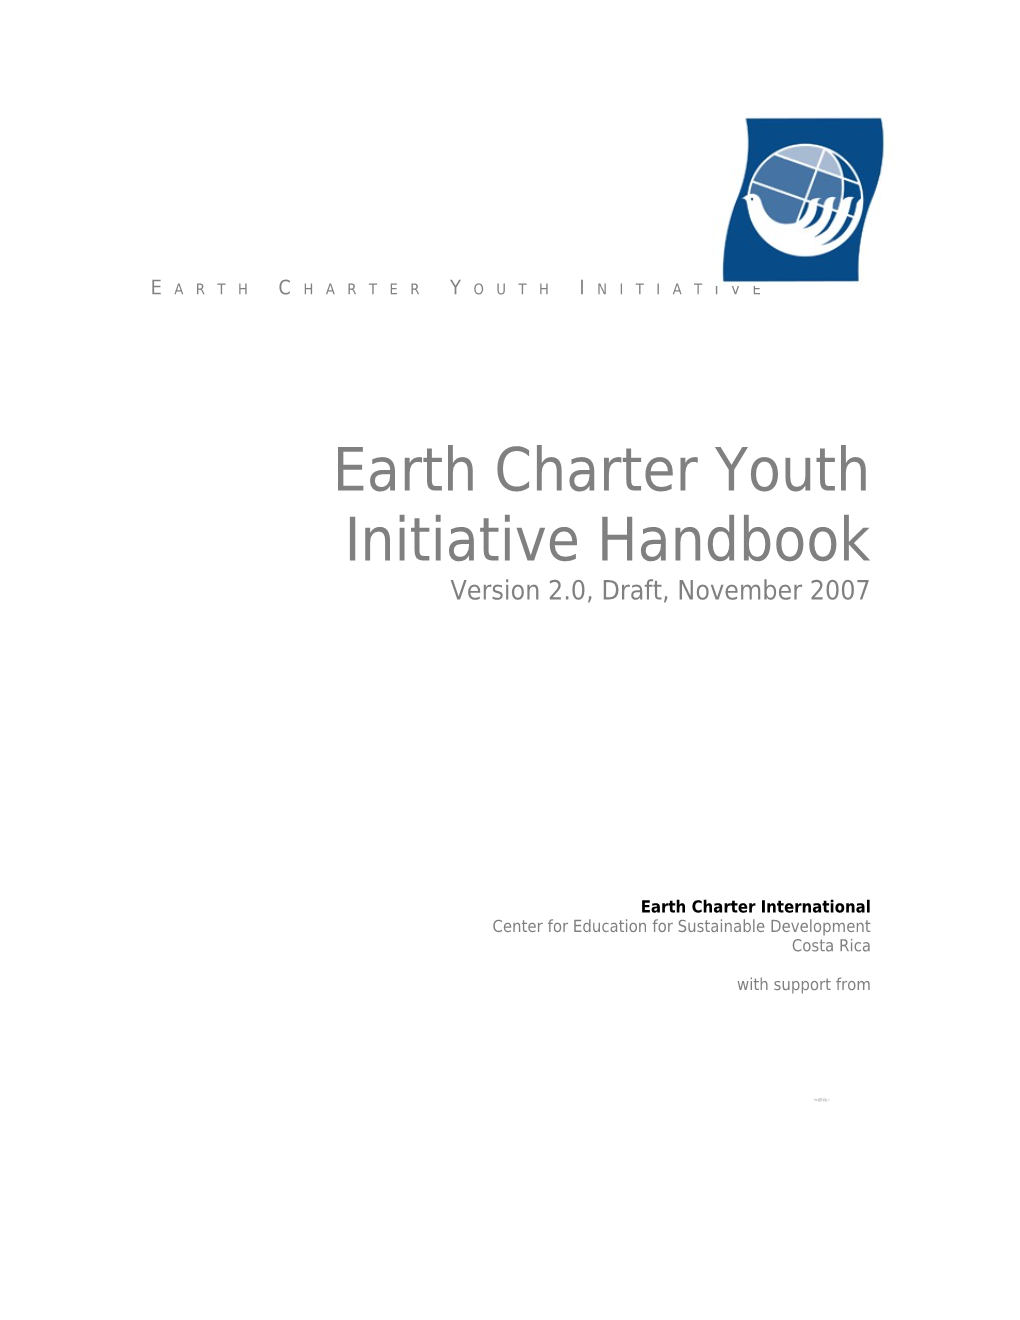 Earth Charter Youth Initiative Handbook - Version 2.0, November 2007 16